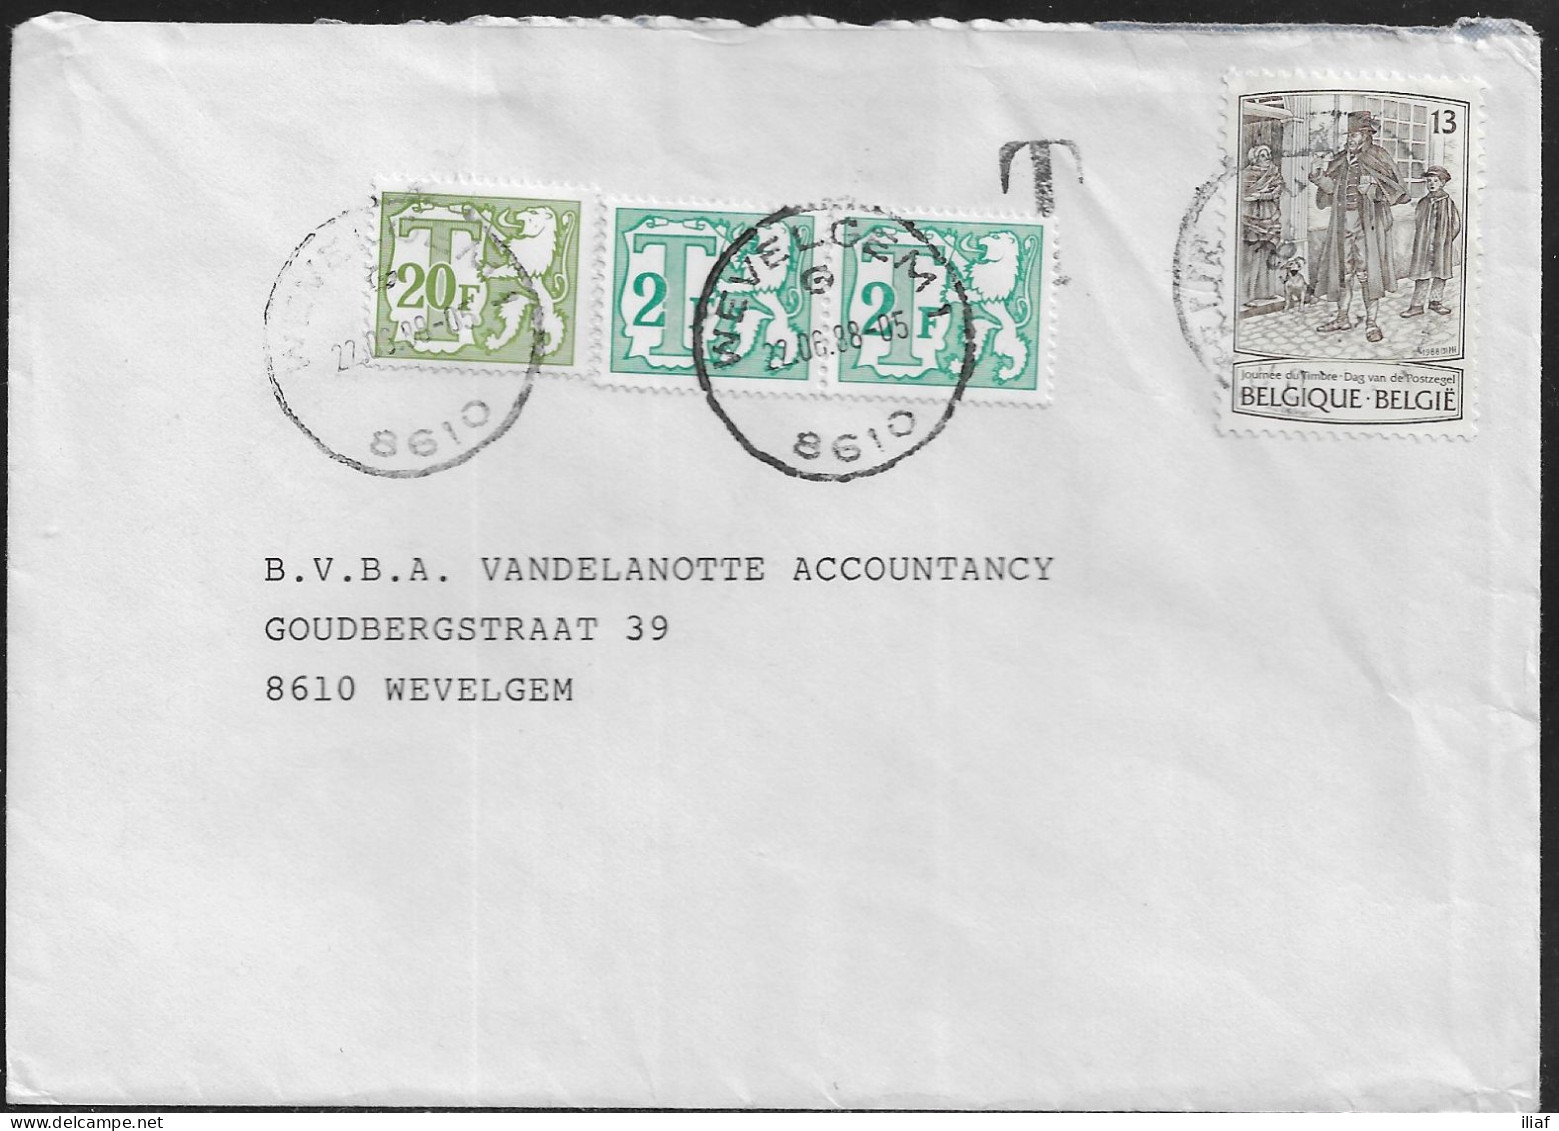 Belgium. Stamps Sc. 1091, J63, J78 On Commercial Letter, Taxed - Postage Due Stamps, Sent From Wevelgem On 22.06.1988 - Briefe U. Dokumente